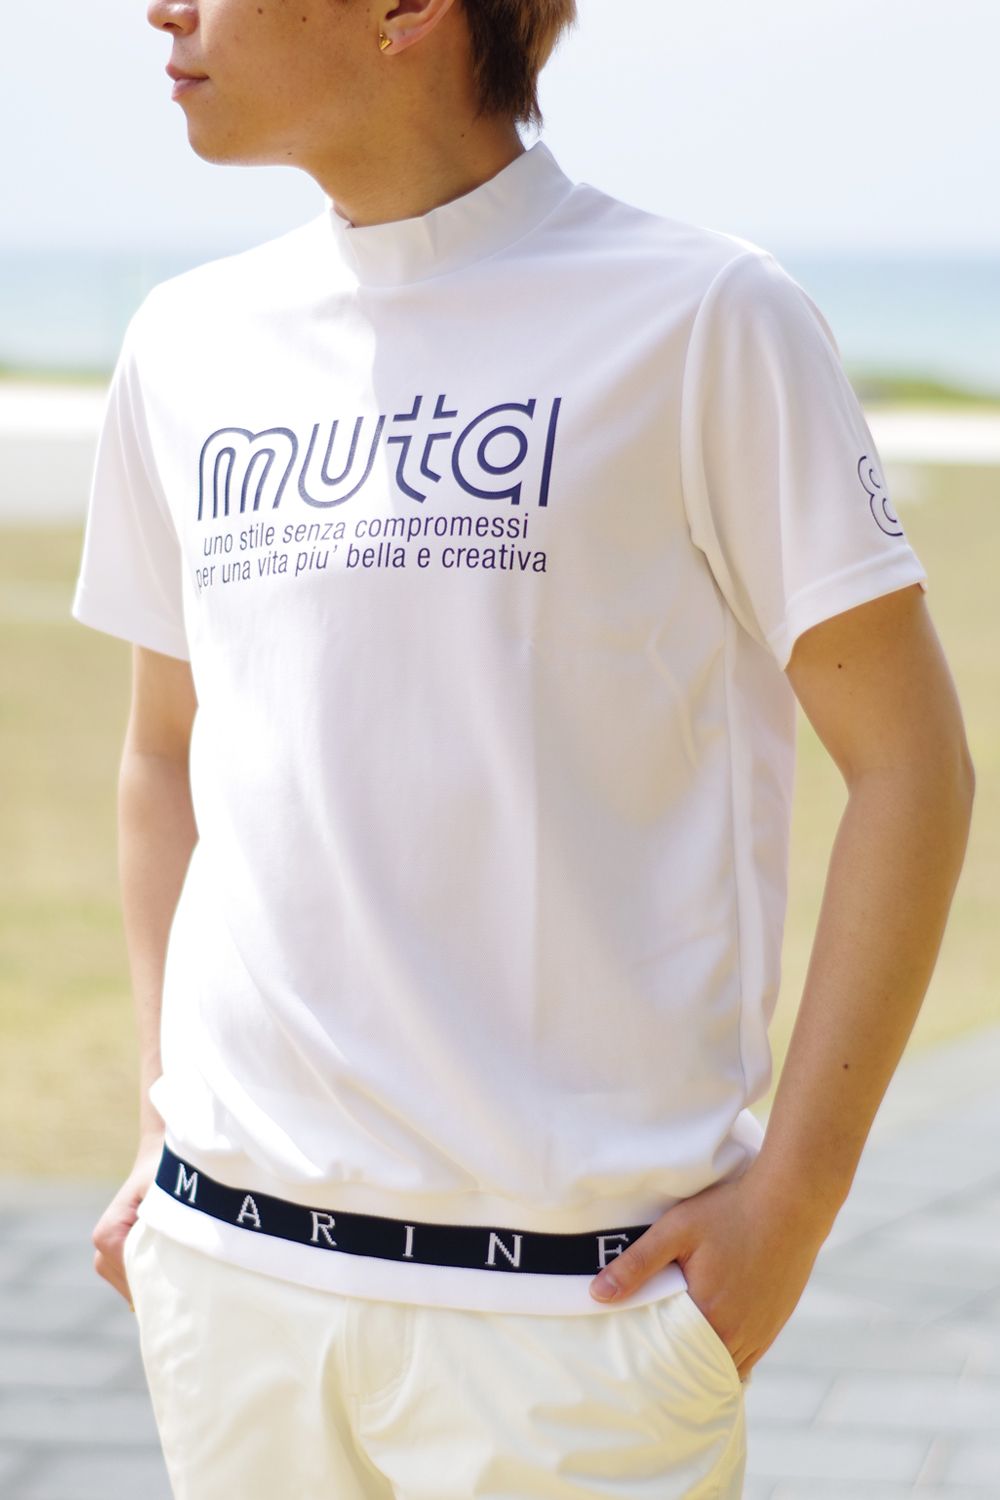 muta - ムータ 【メンズ ゴルフウェア】 | GOSSIP GOLF